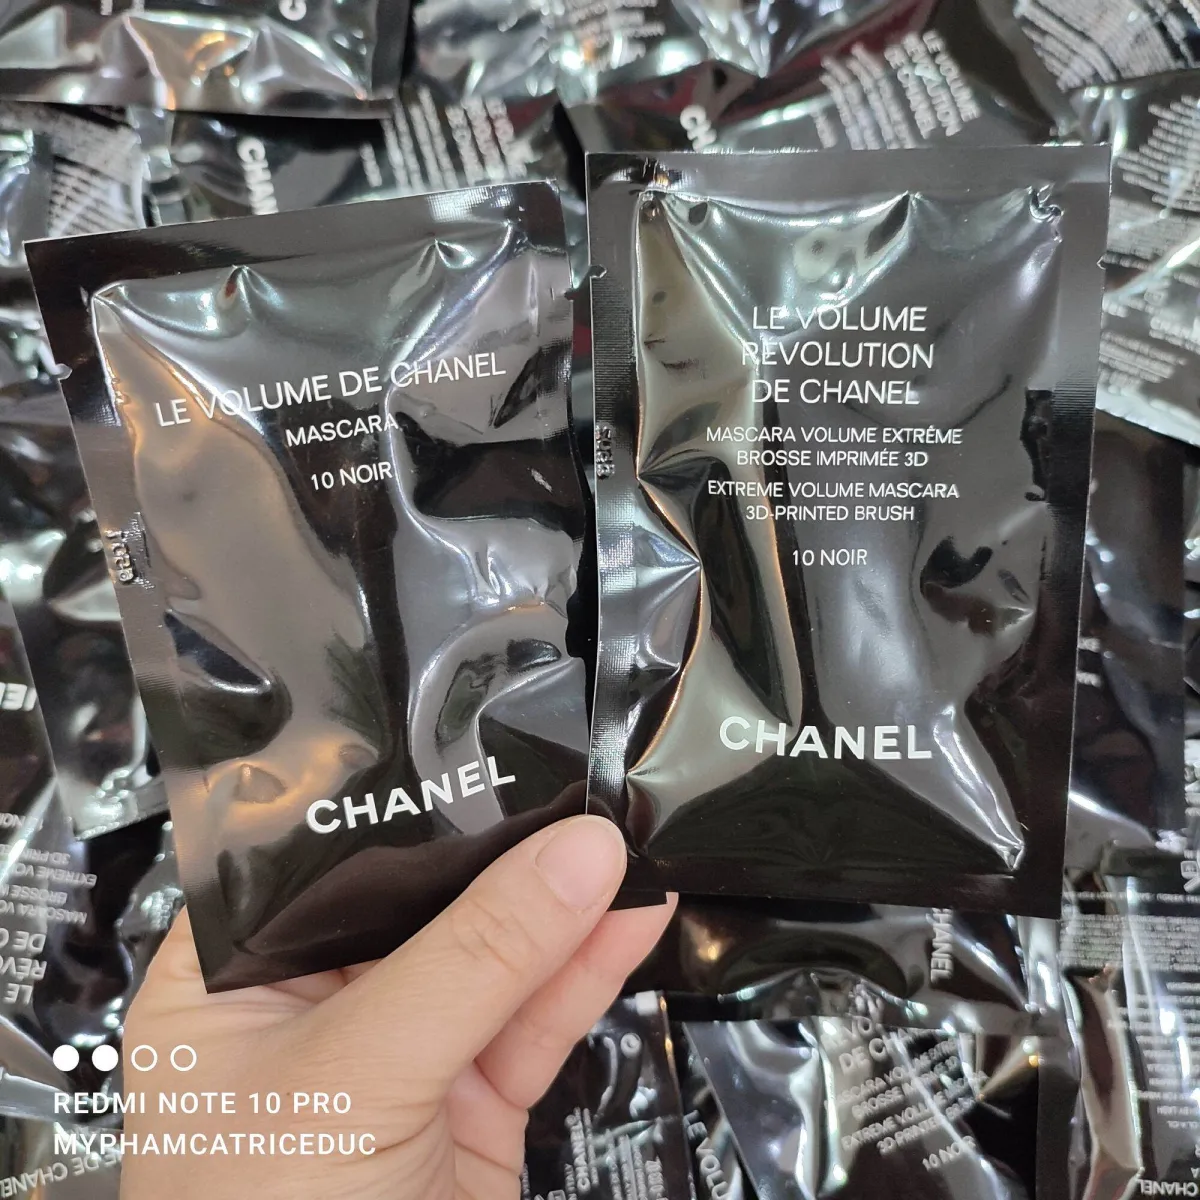 Chanel Le Volume De Chanel Waterproof Mascara Review